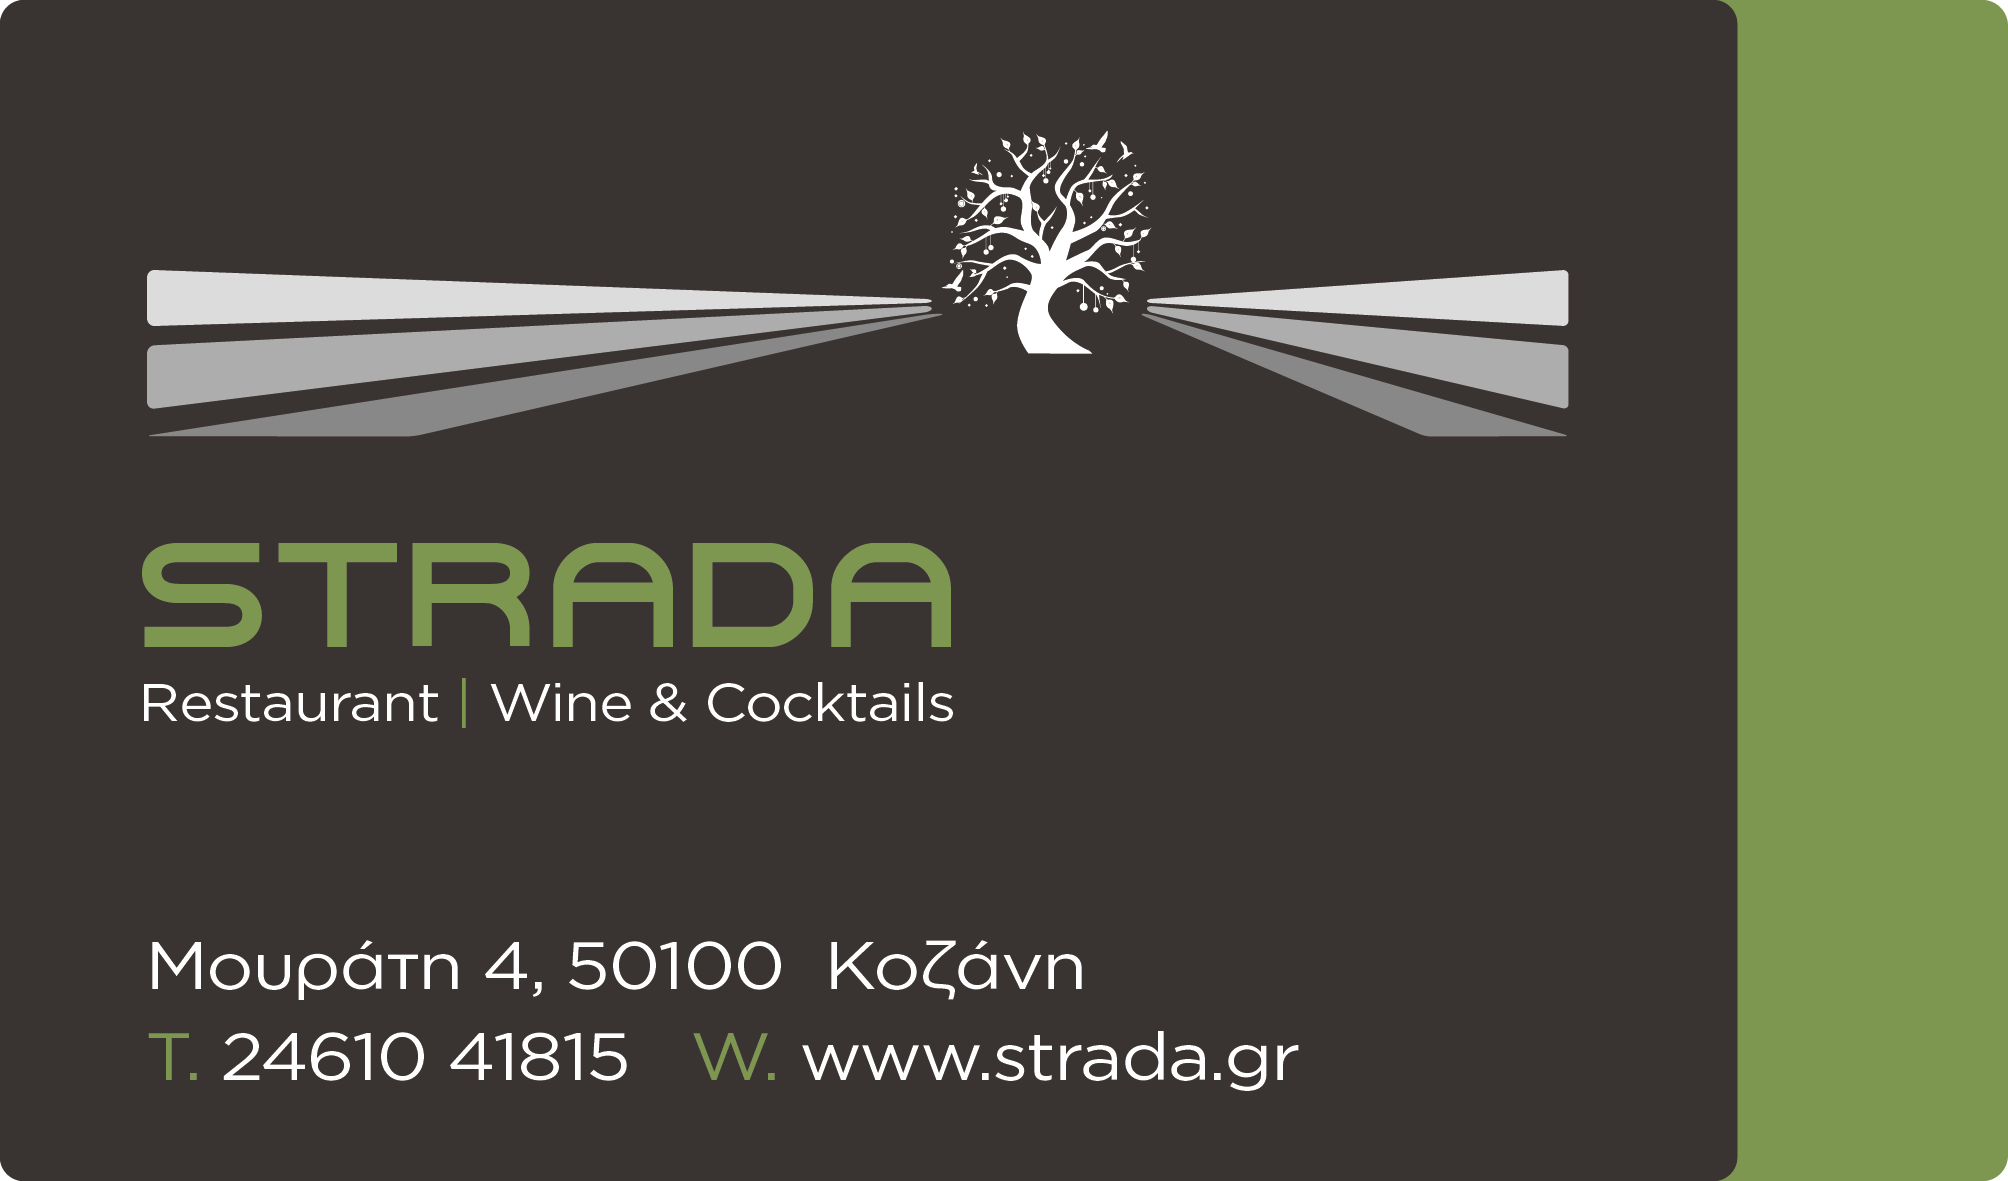 Strada Restaurant